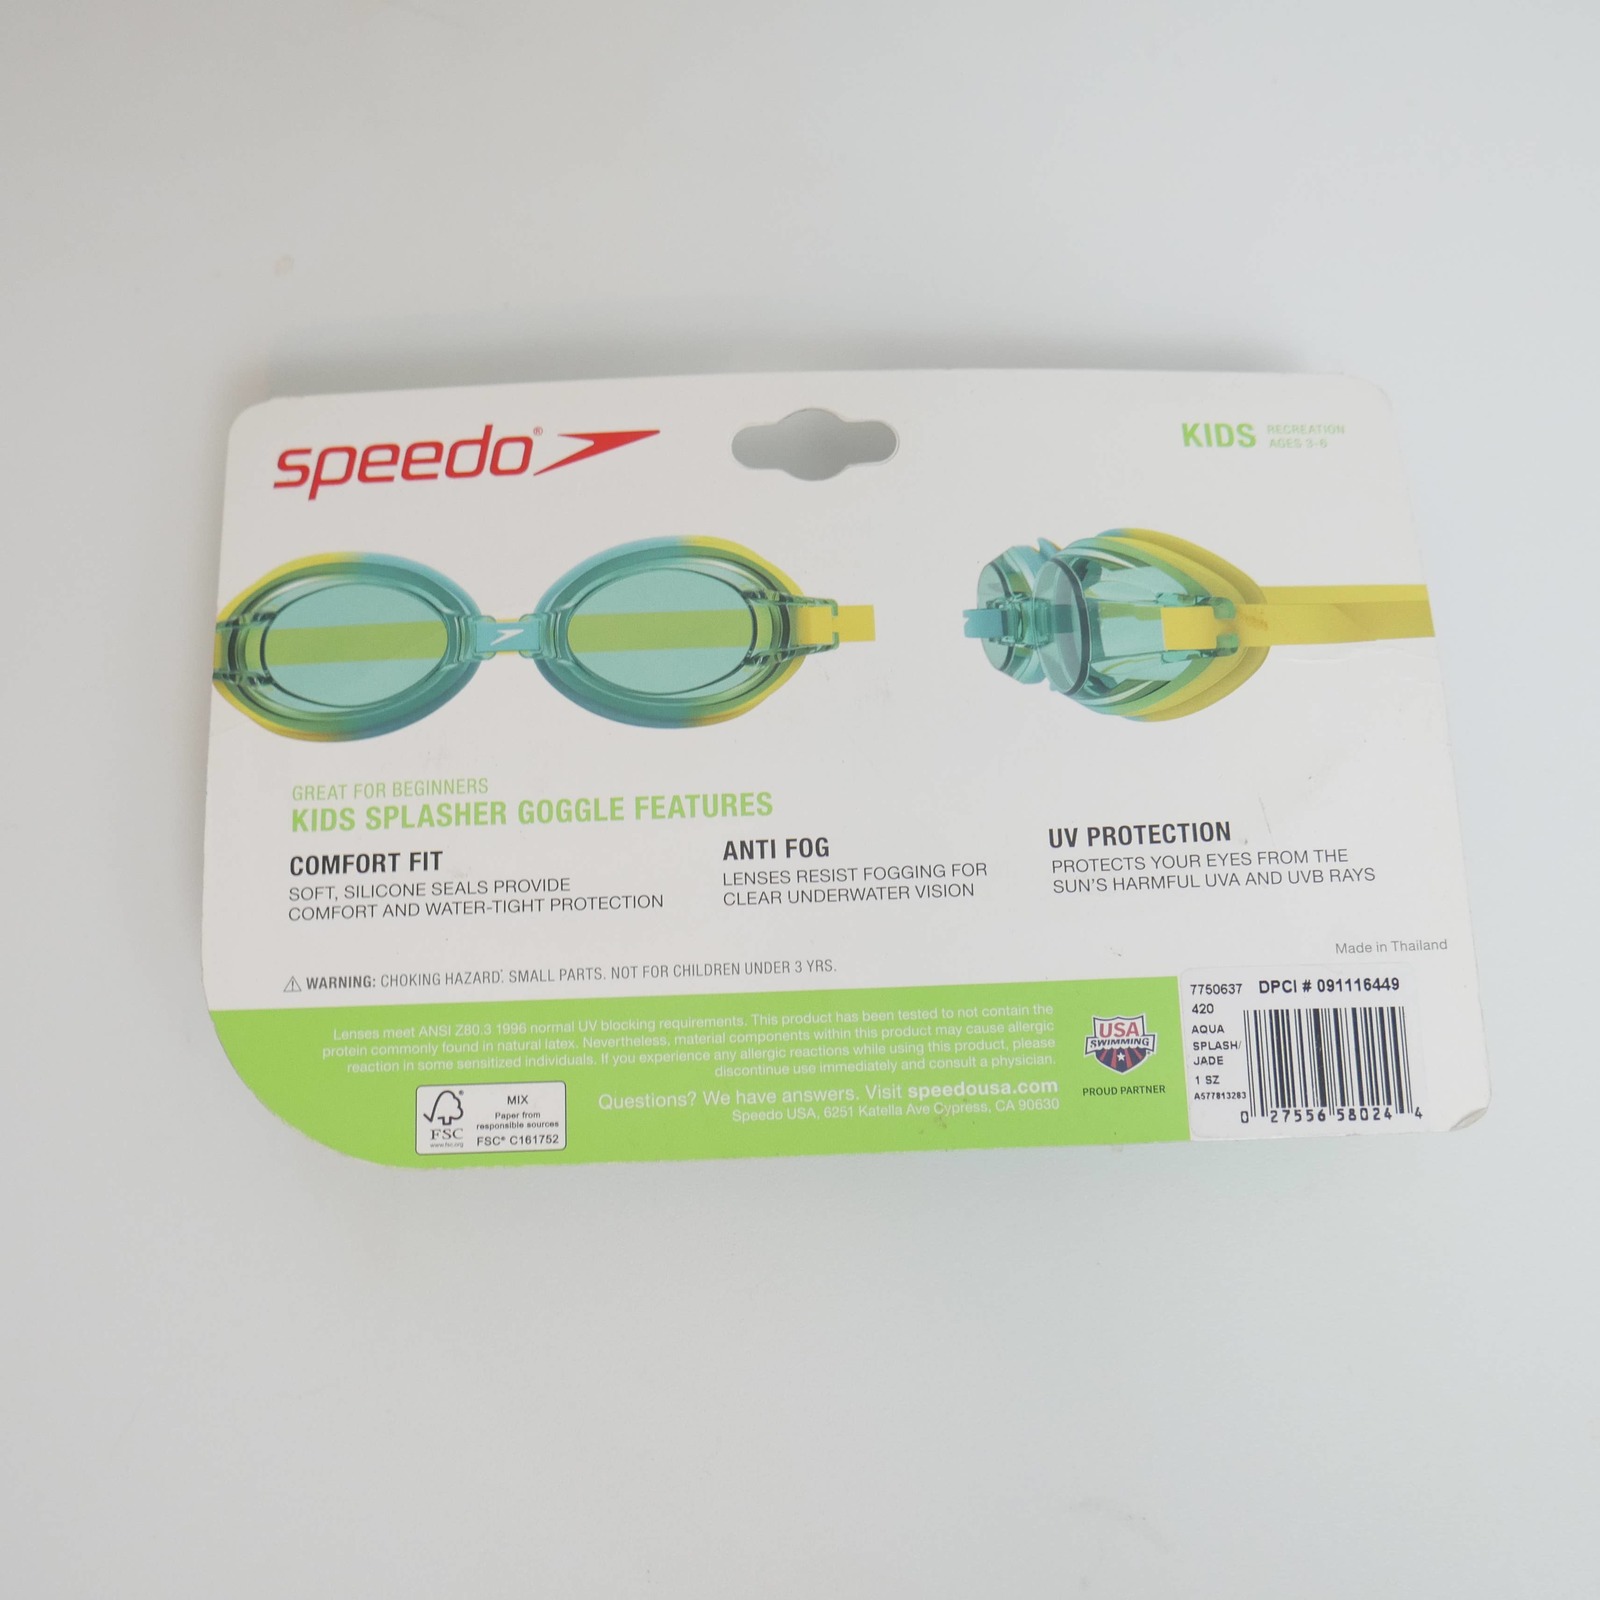 Speedo Kids Splasher Comfort Fit Anti Fog Swimming Goggles (Ages 3-6) - $7.71